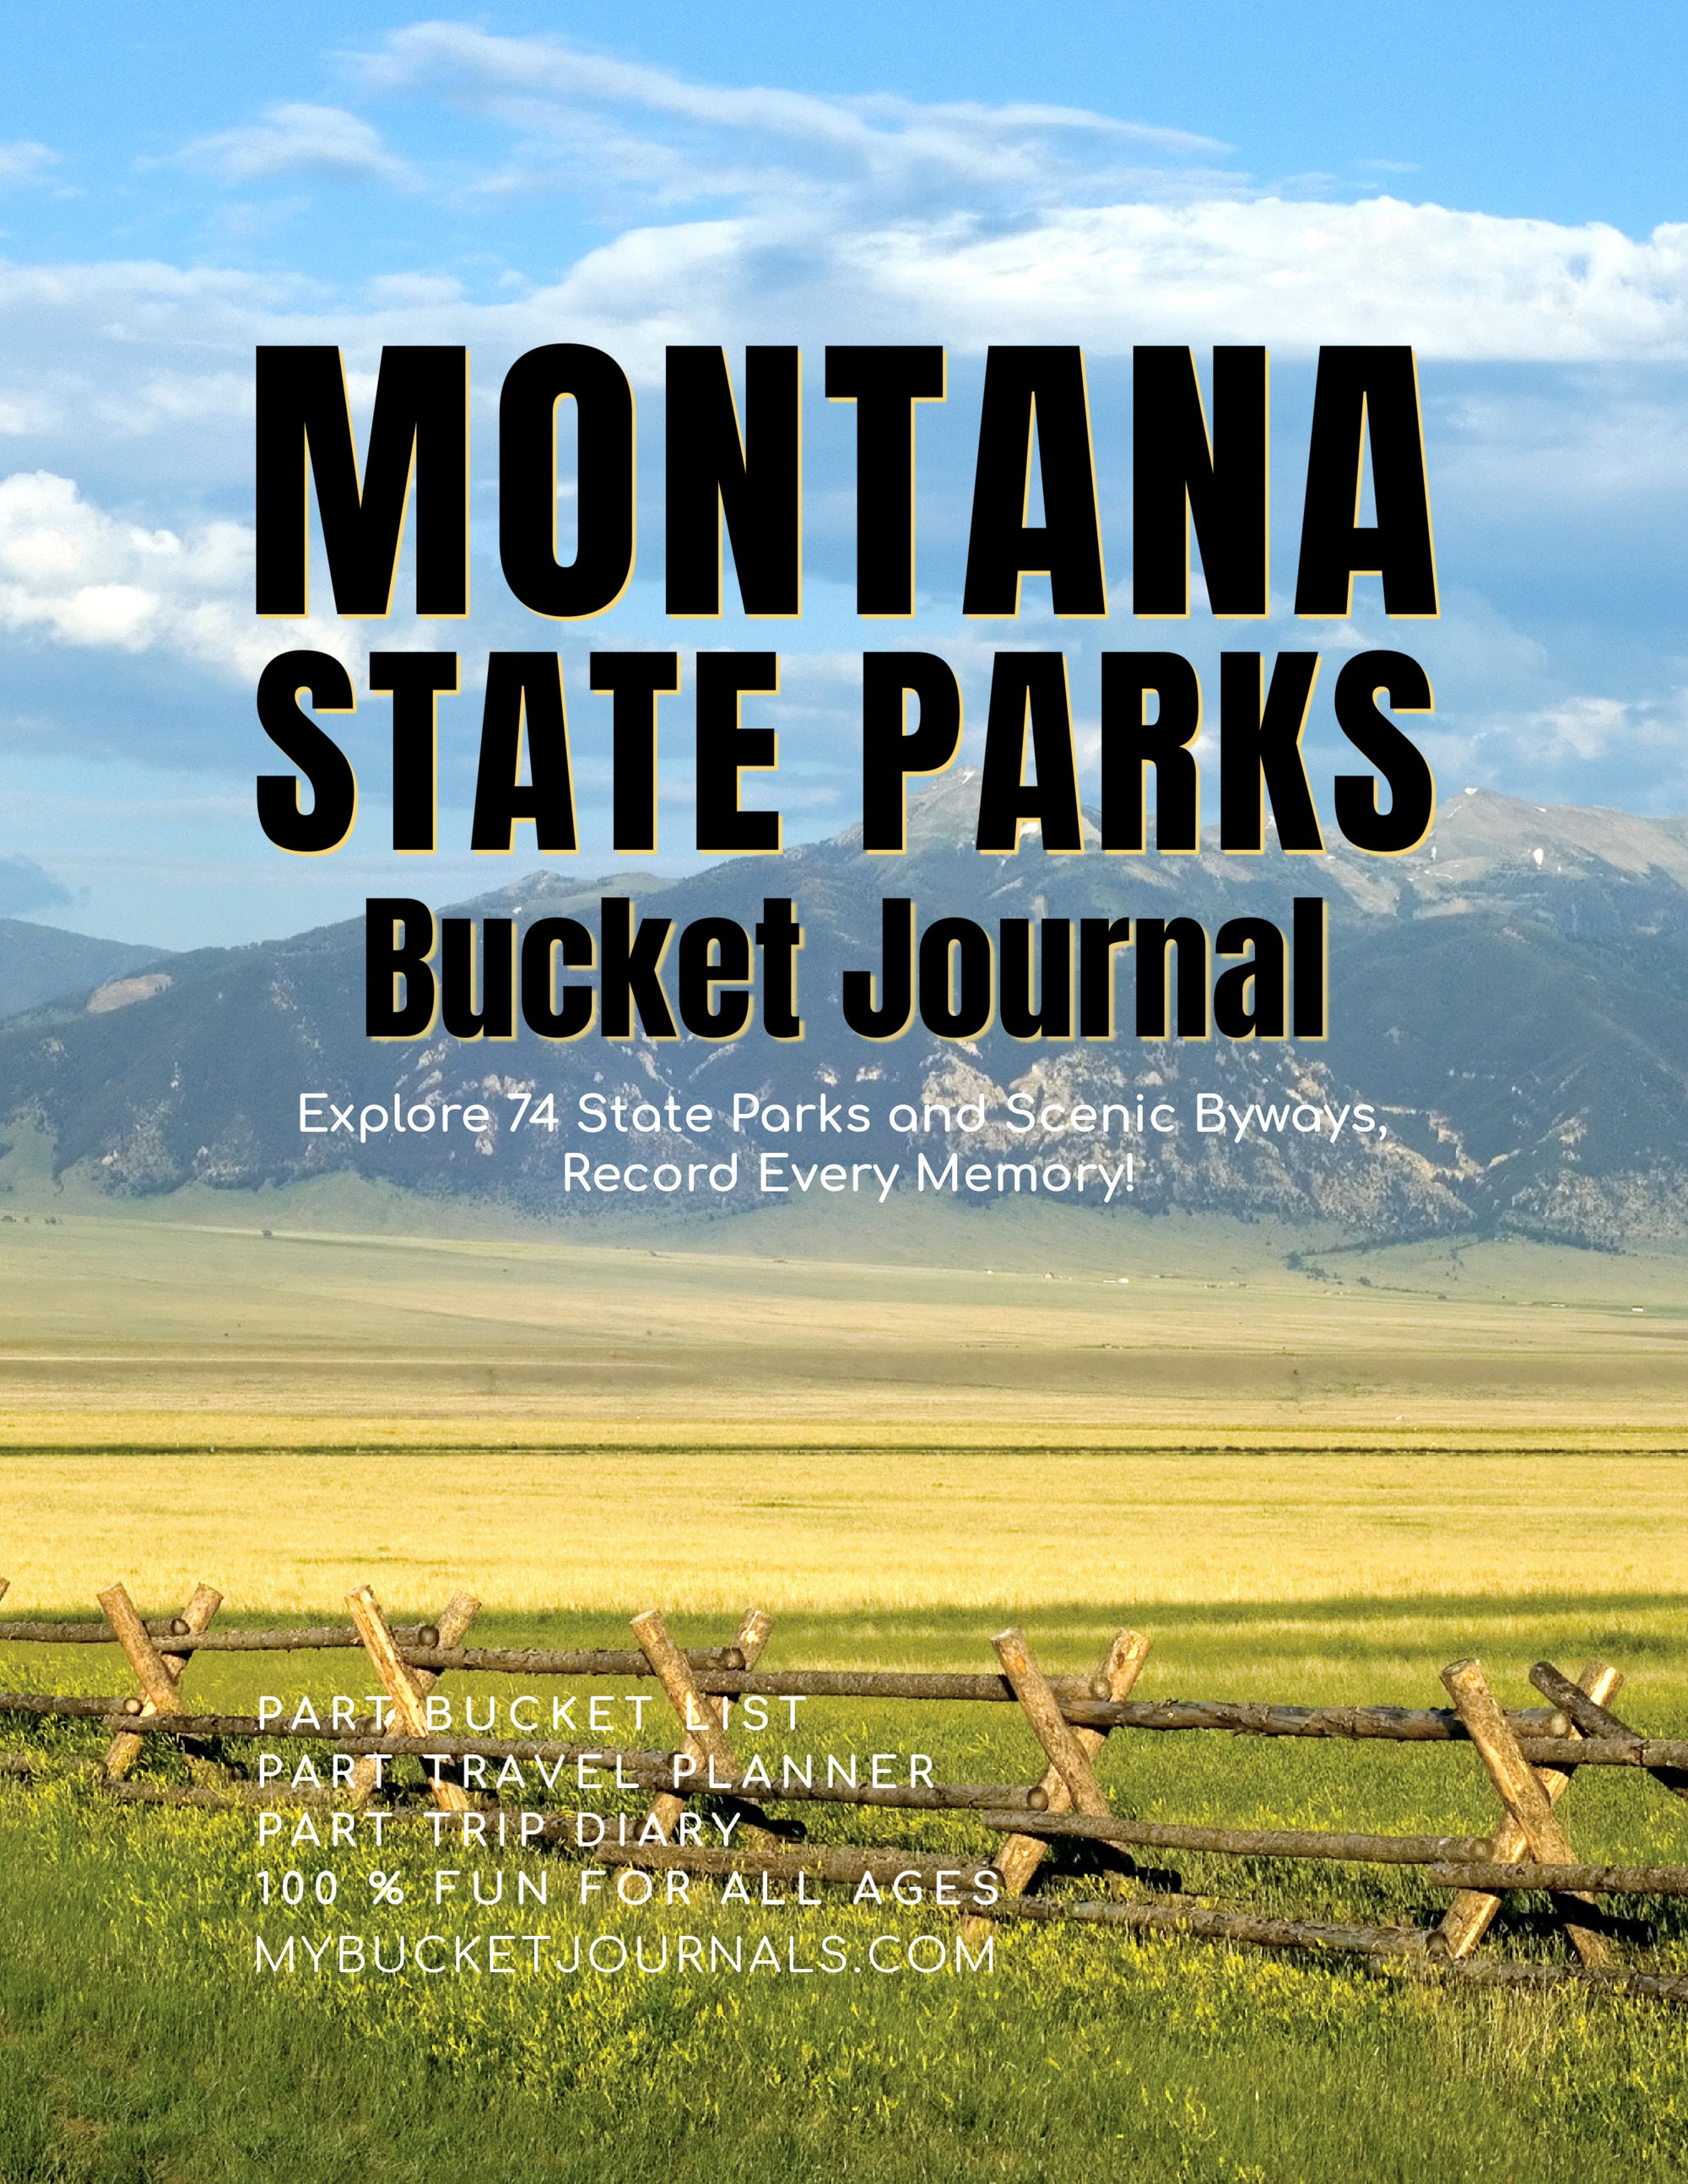 SD-Montana State Parks Bucket Journal